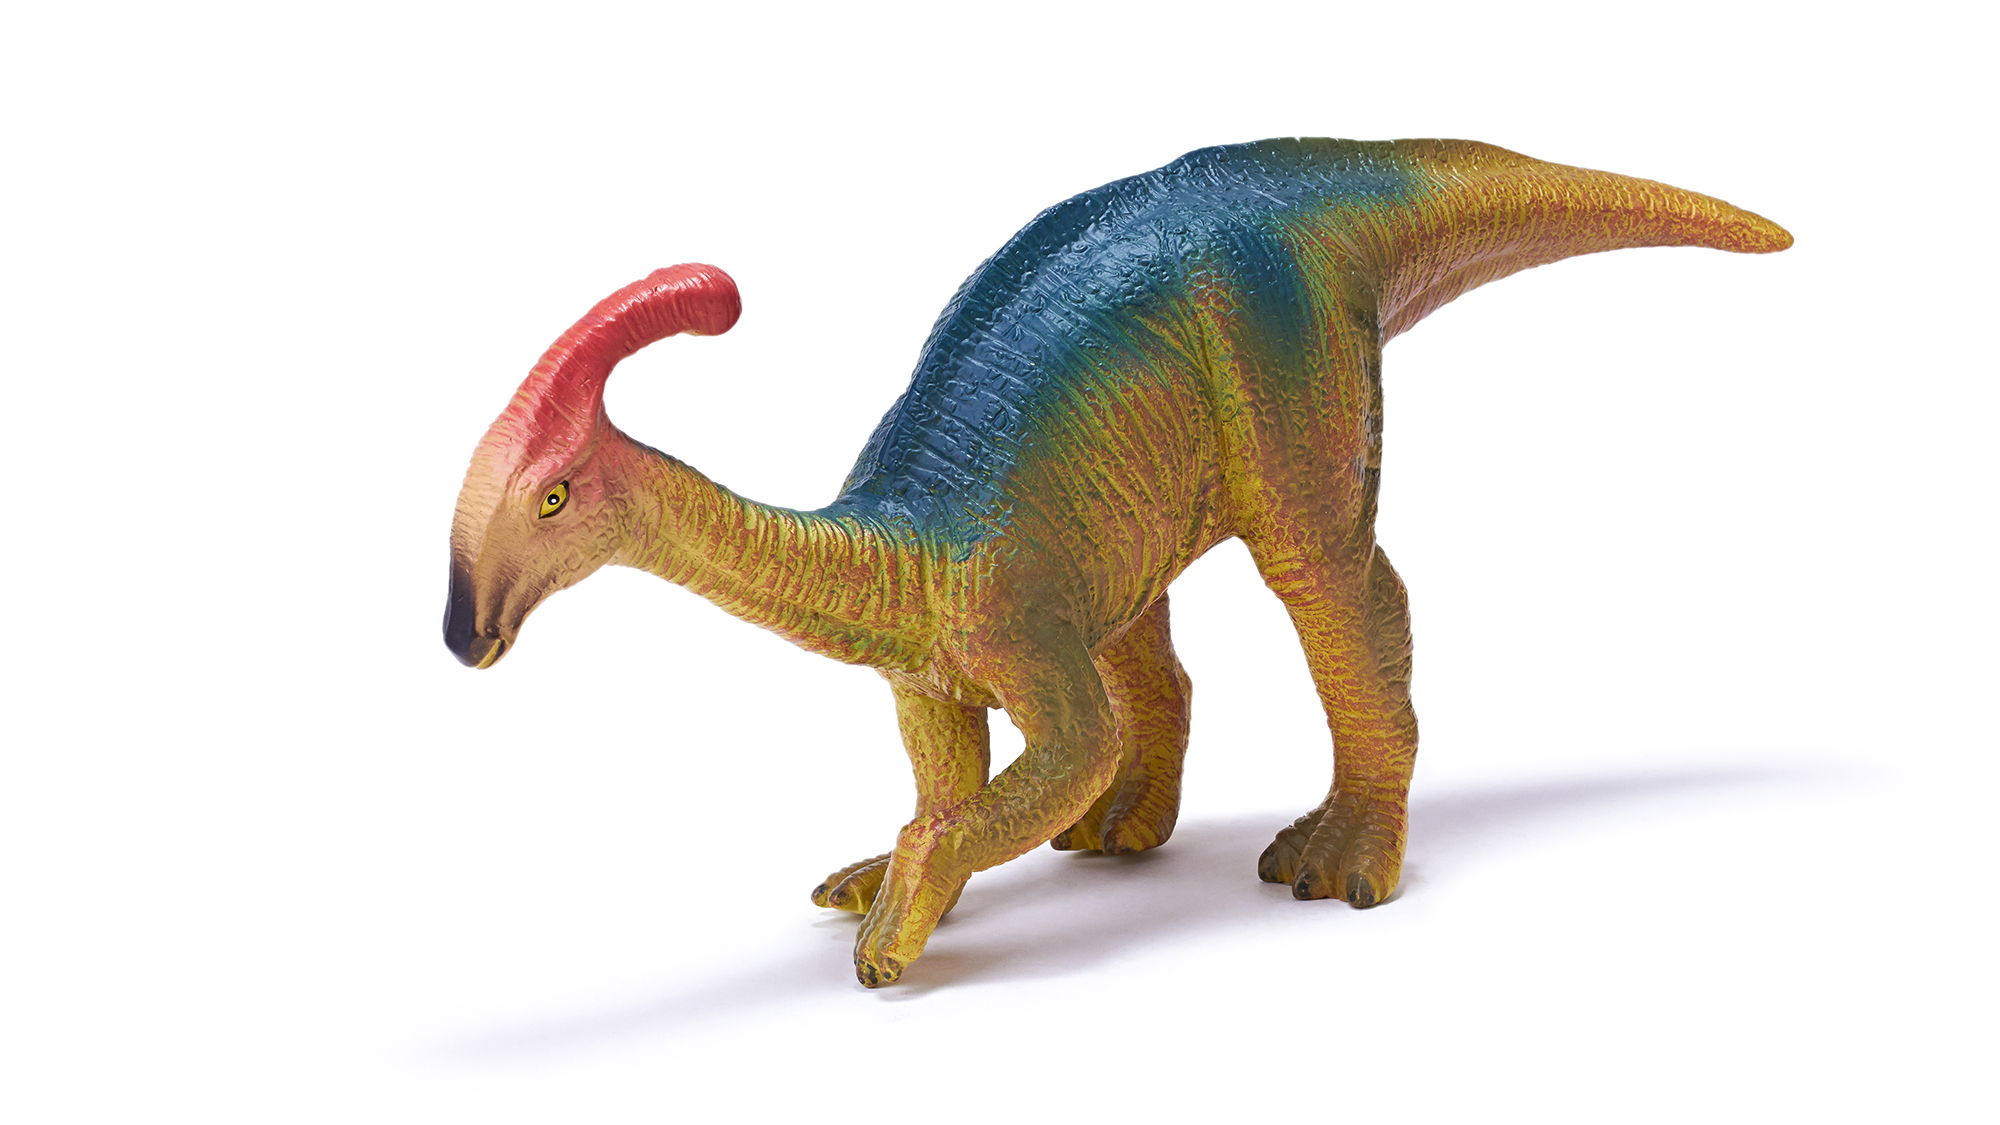 Parasaurolophus toy - Dinosaur model｜Soft rubber dinosaur